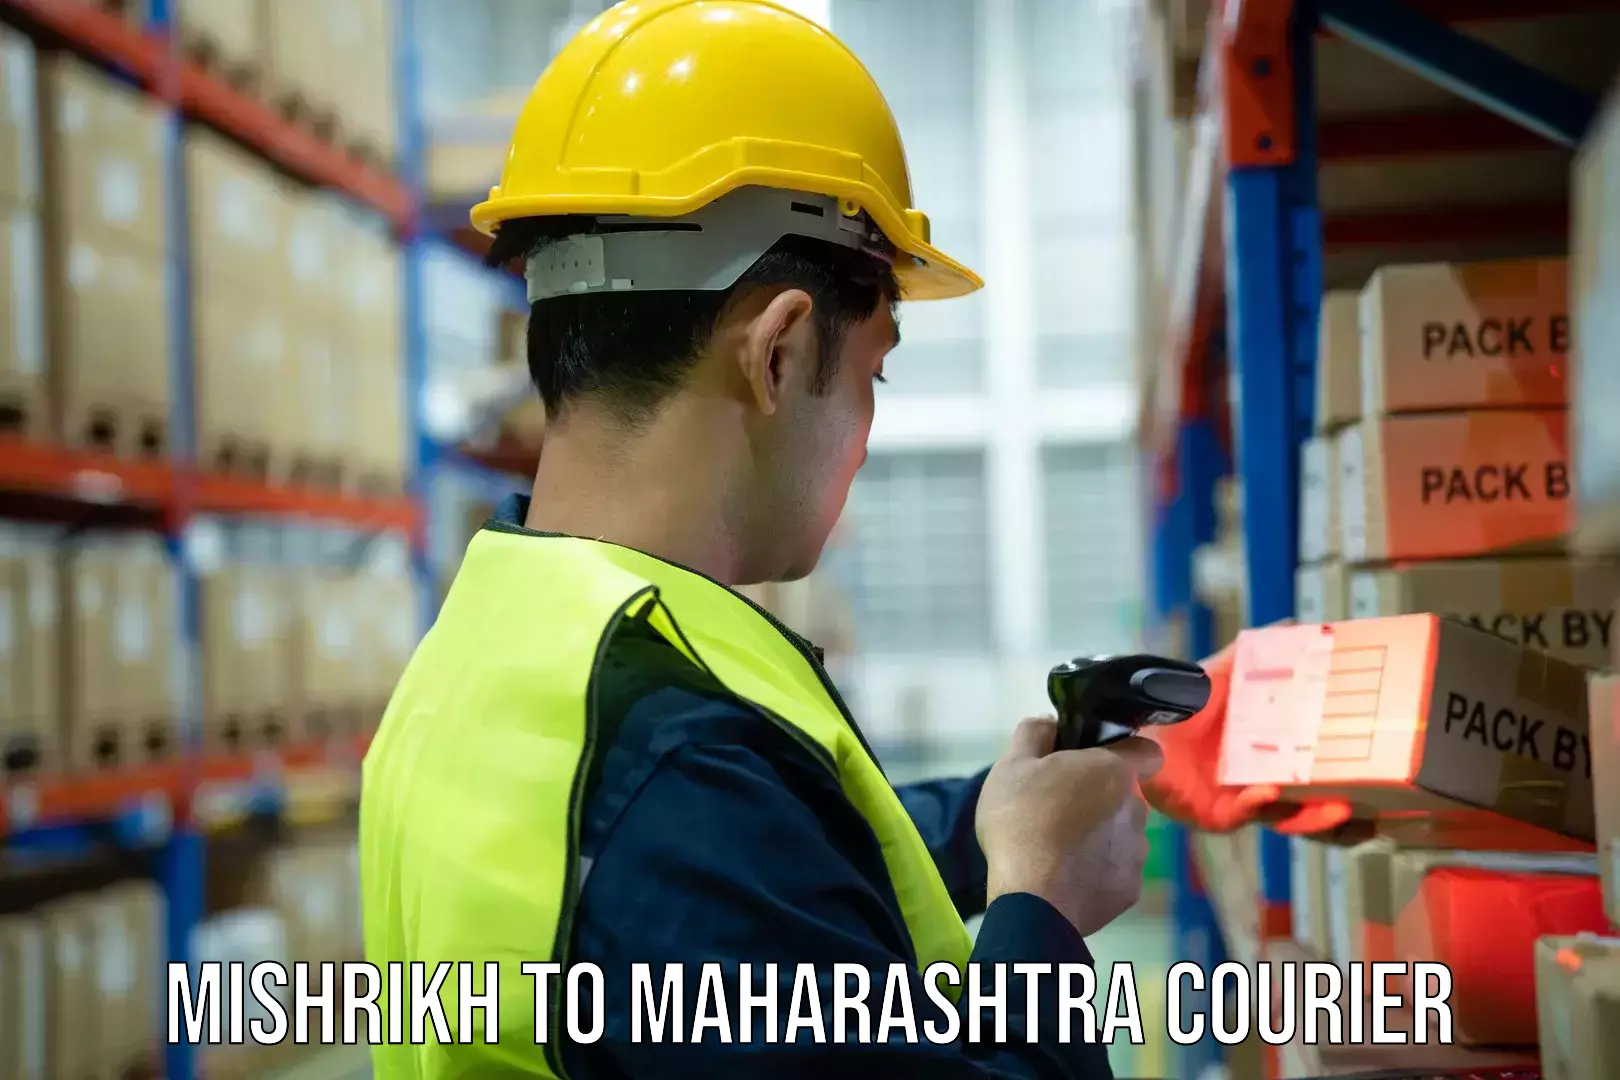 Express logistics service Mishrikh to Maharashtra